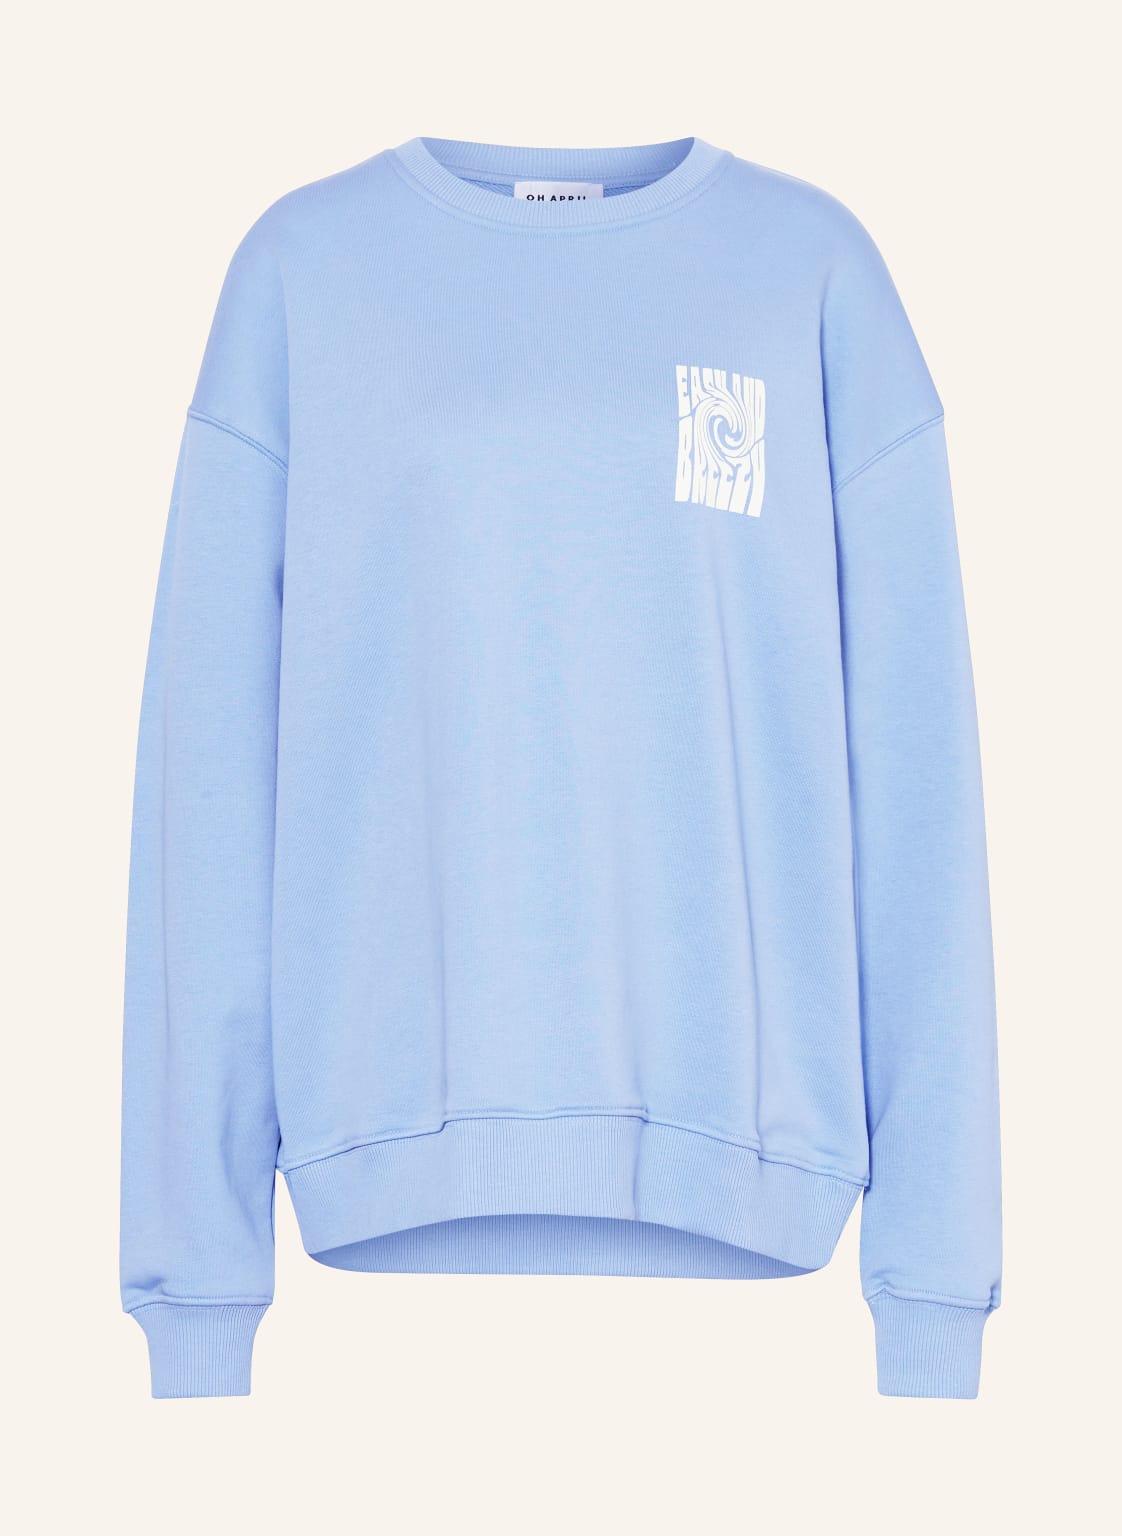 Oh April Oversized-Sweatshirt blau von OH APRIL